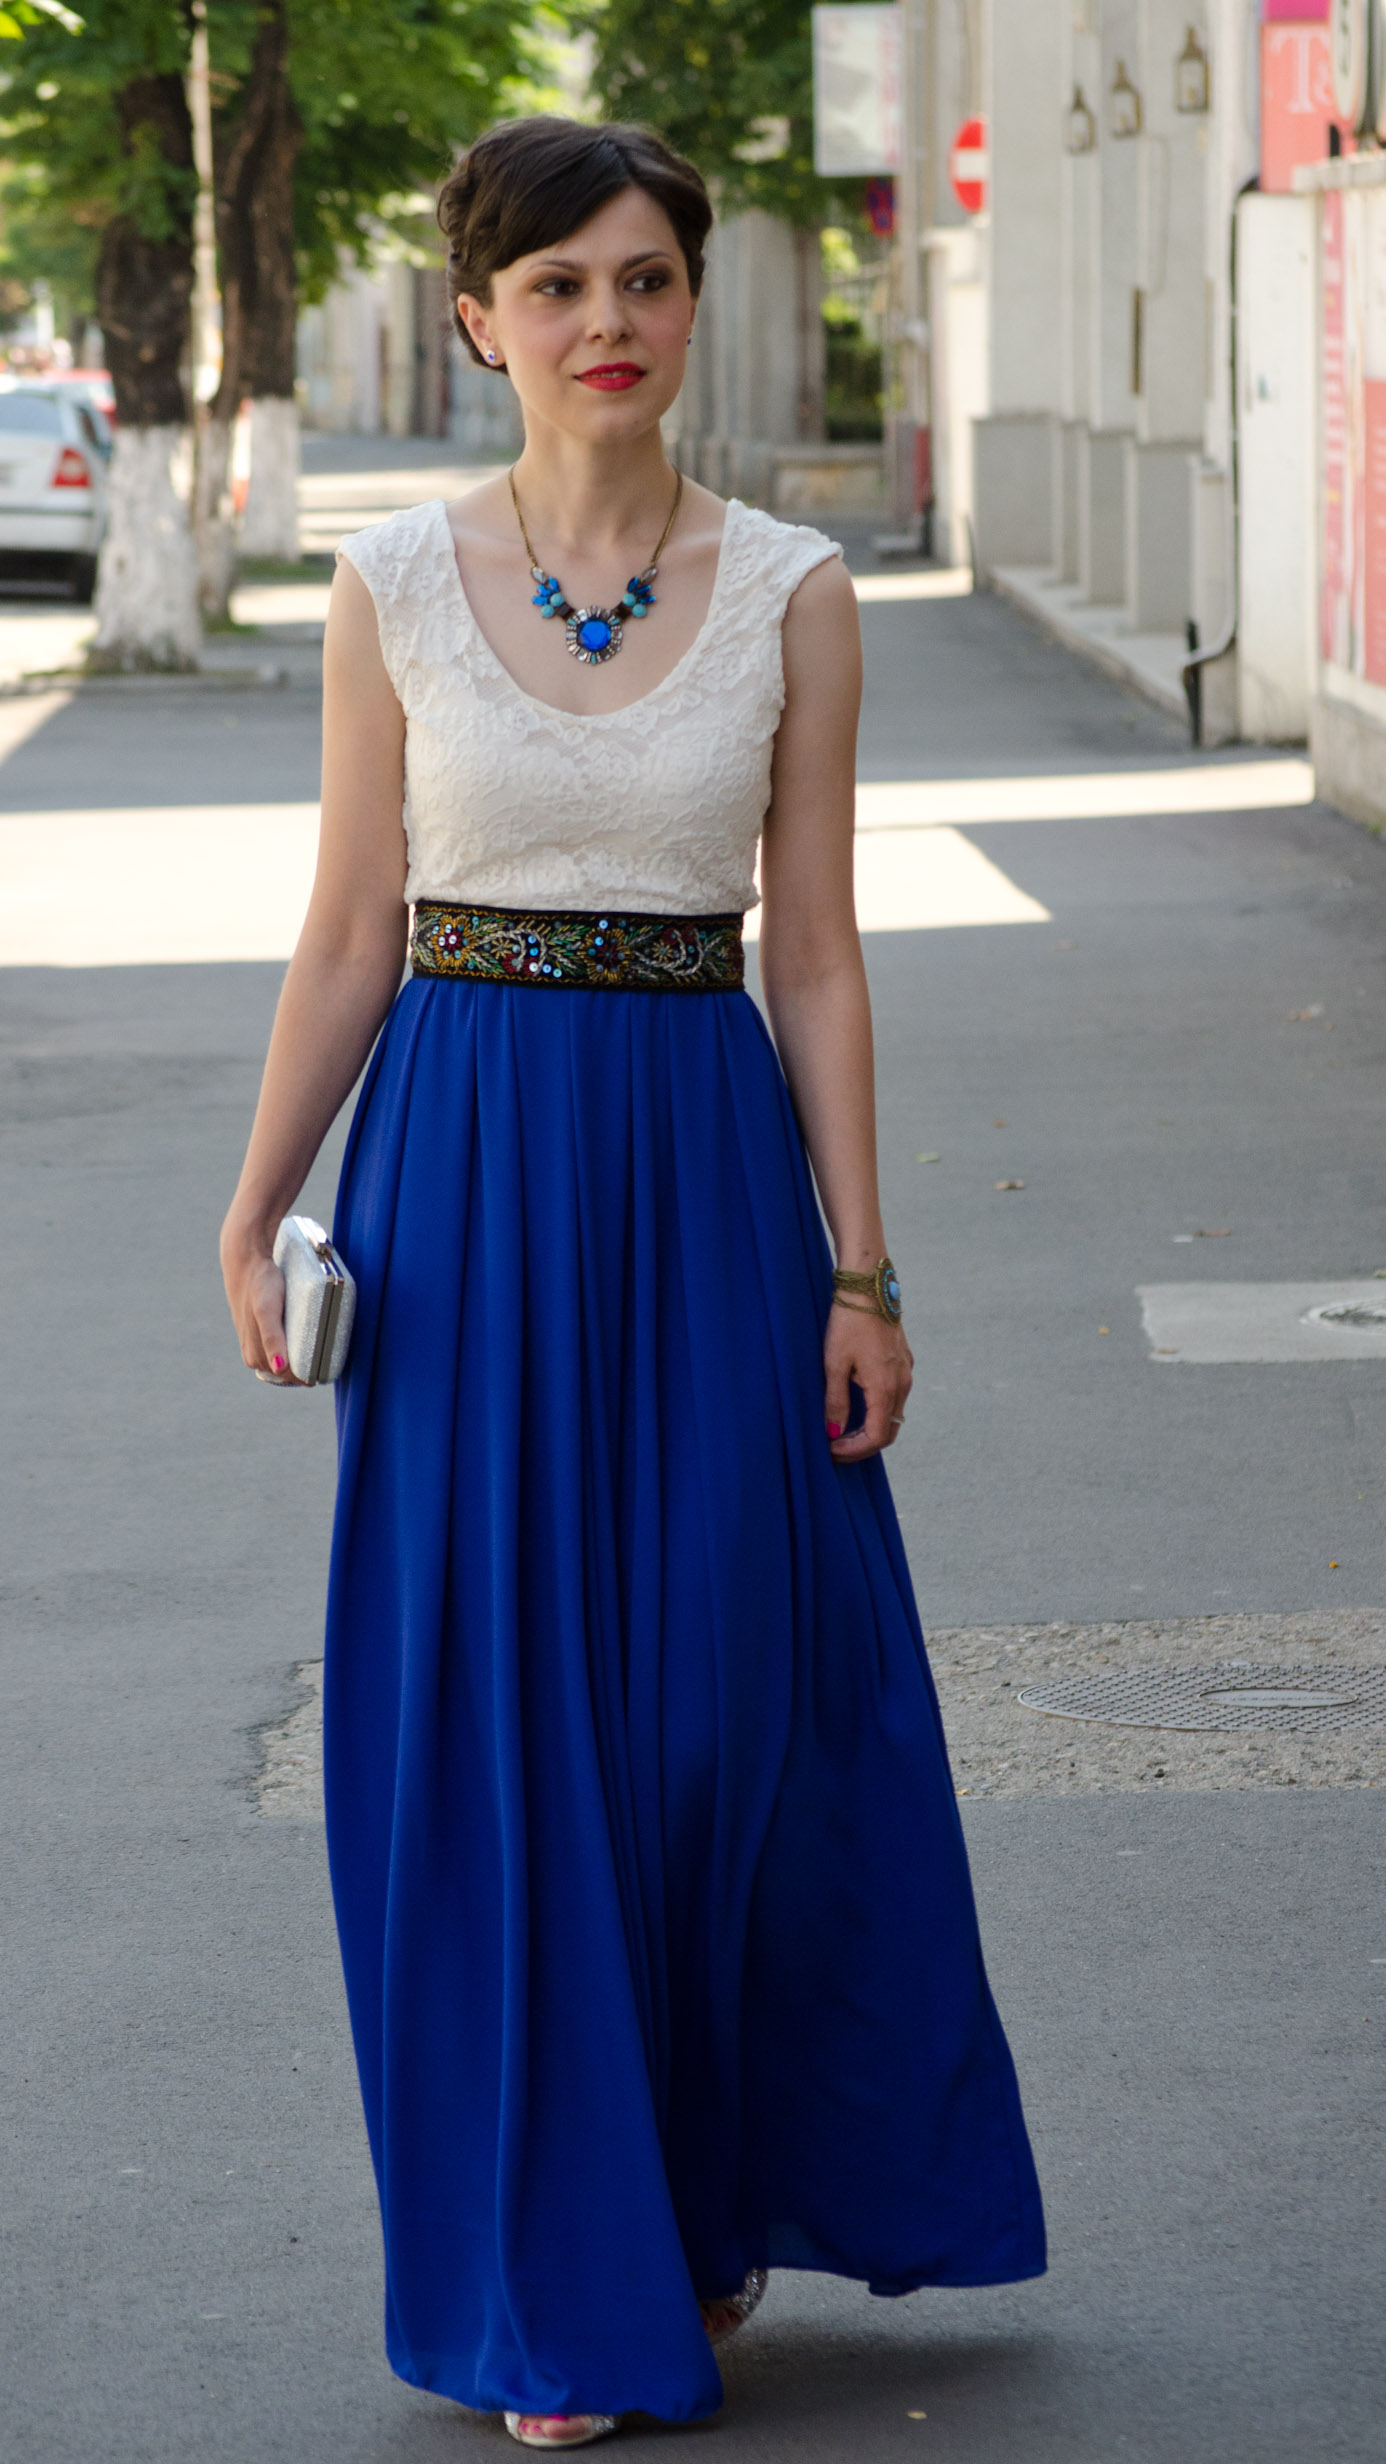 maxi dress cobalt blue white lace statement necklace blue topper hat wedding attire handmade waistband